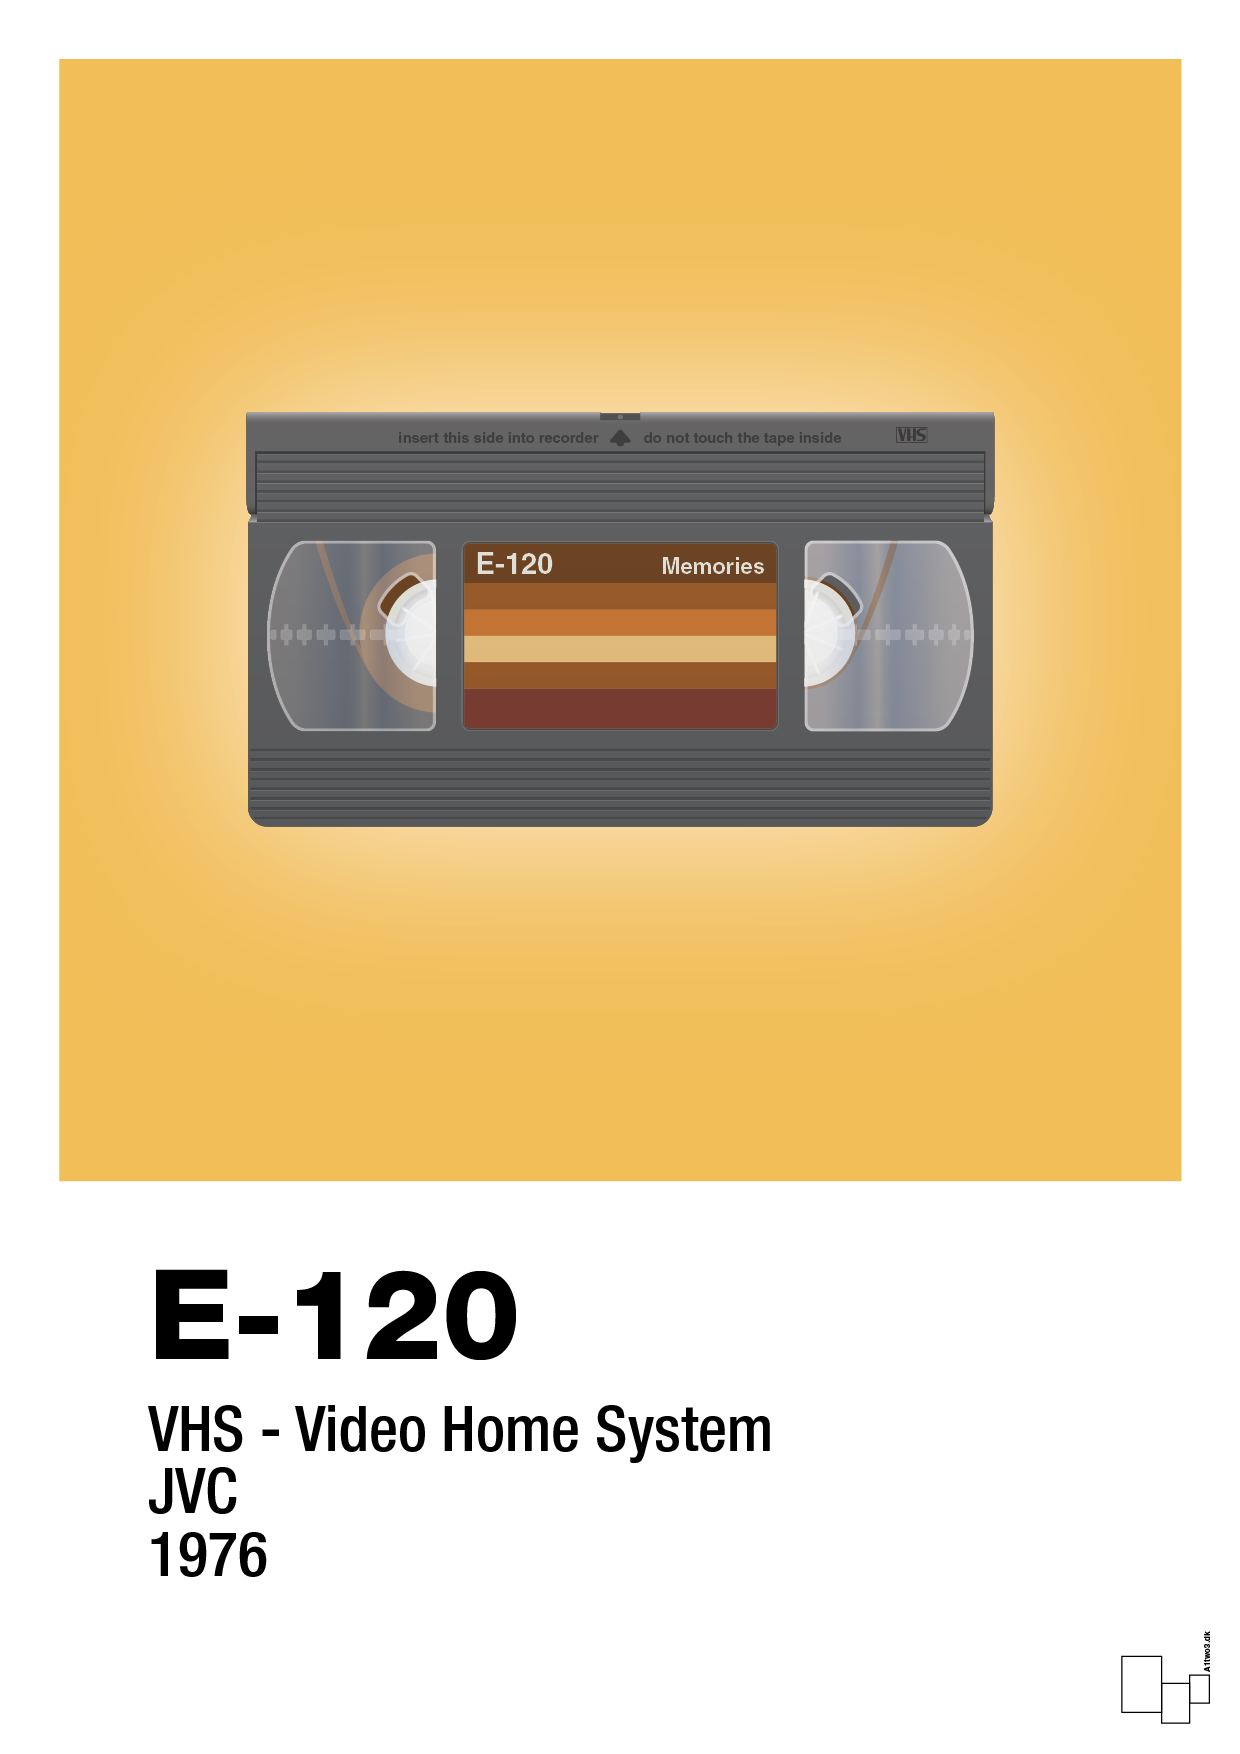 videobånd e-120 - Plakat med Grafik i Honeycomb